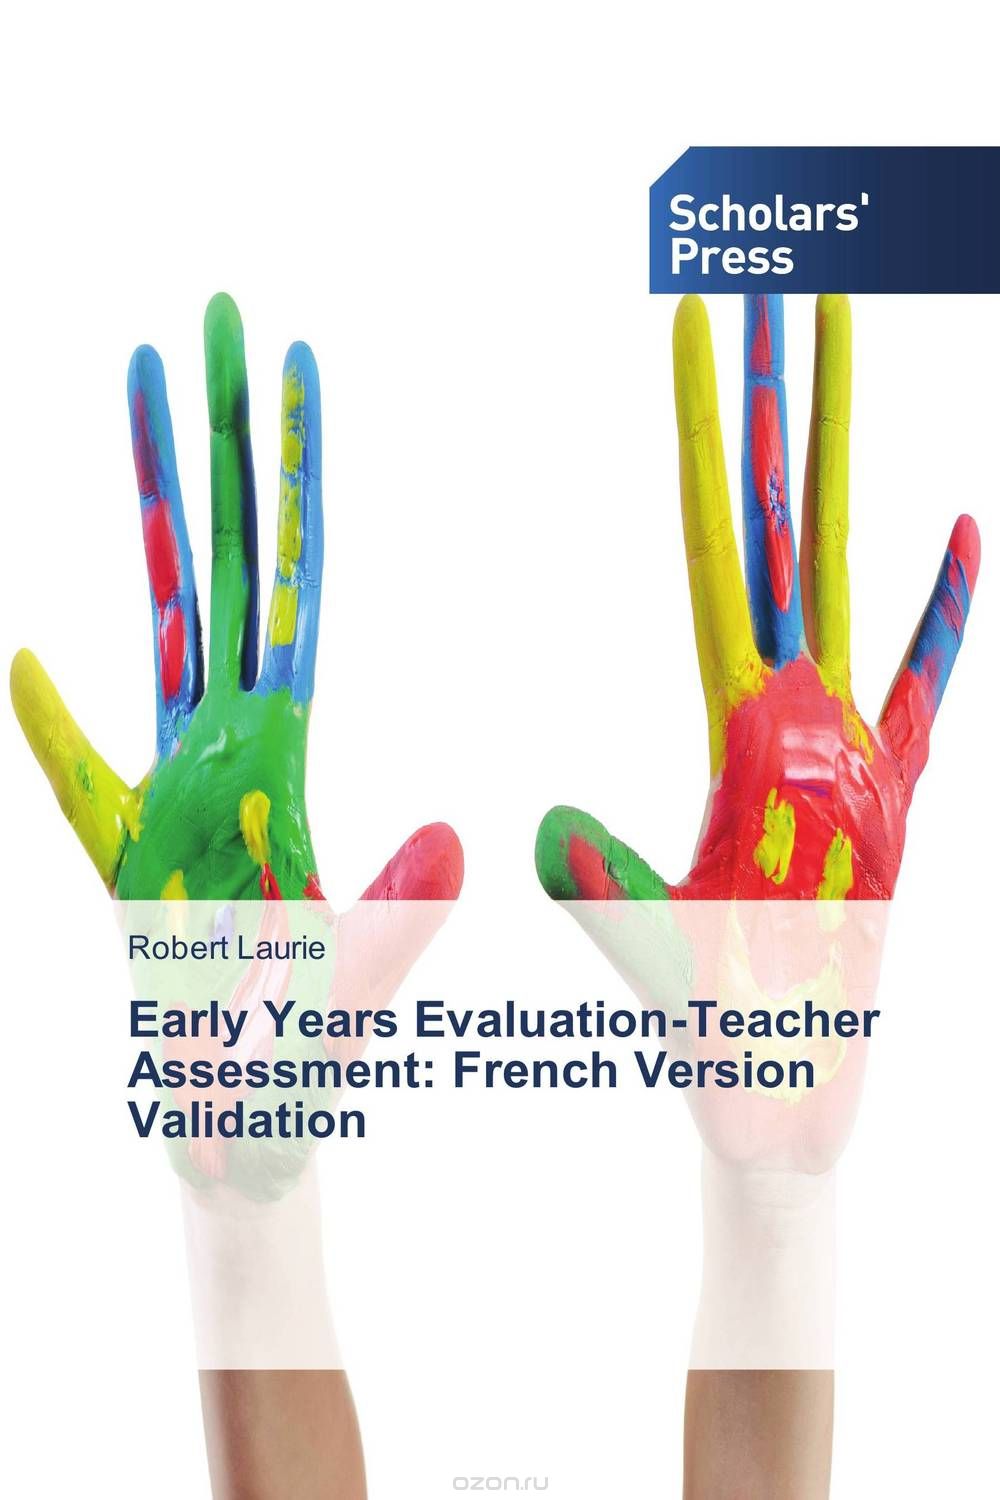 Скачать книгу "Early Years Evaluation-Teacher Assessment: French Version Validation"